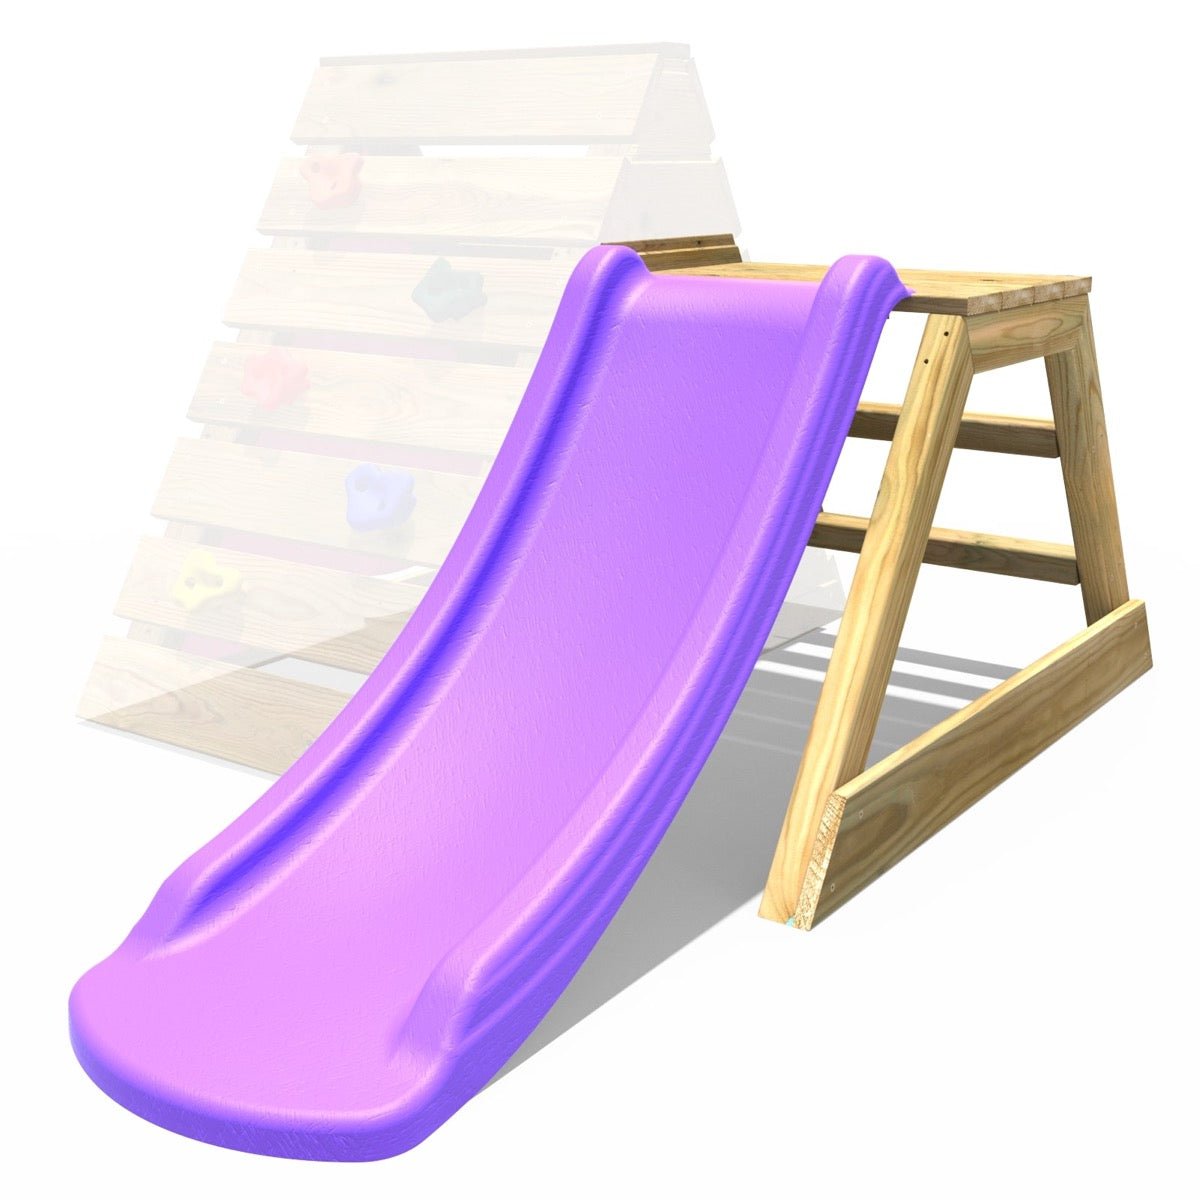 Rebo Mini wooden climbing Pyramid Add on Slide platform with Purple Slide